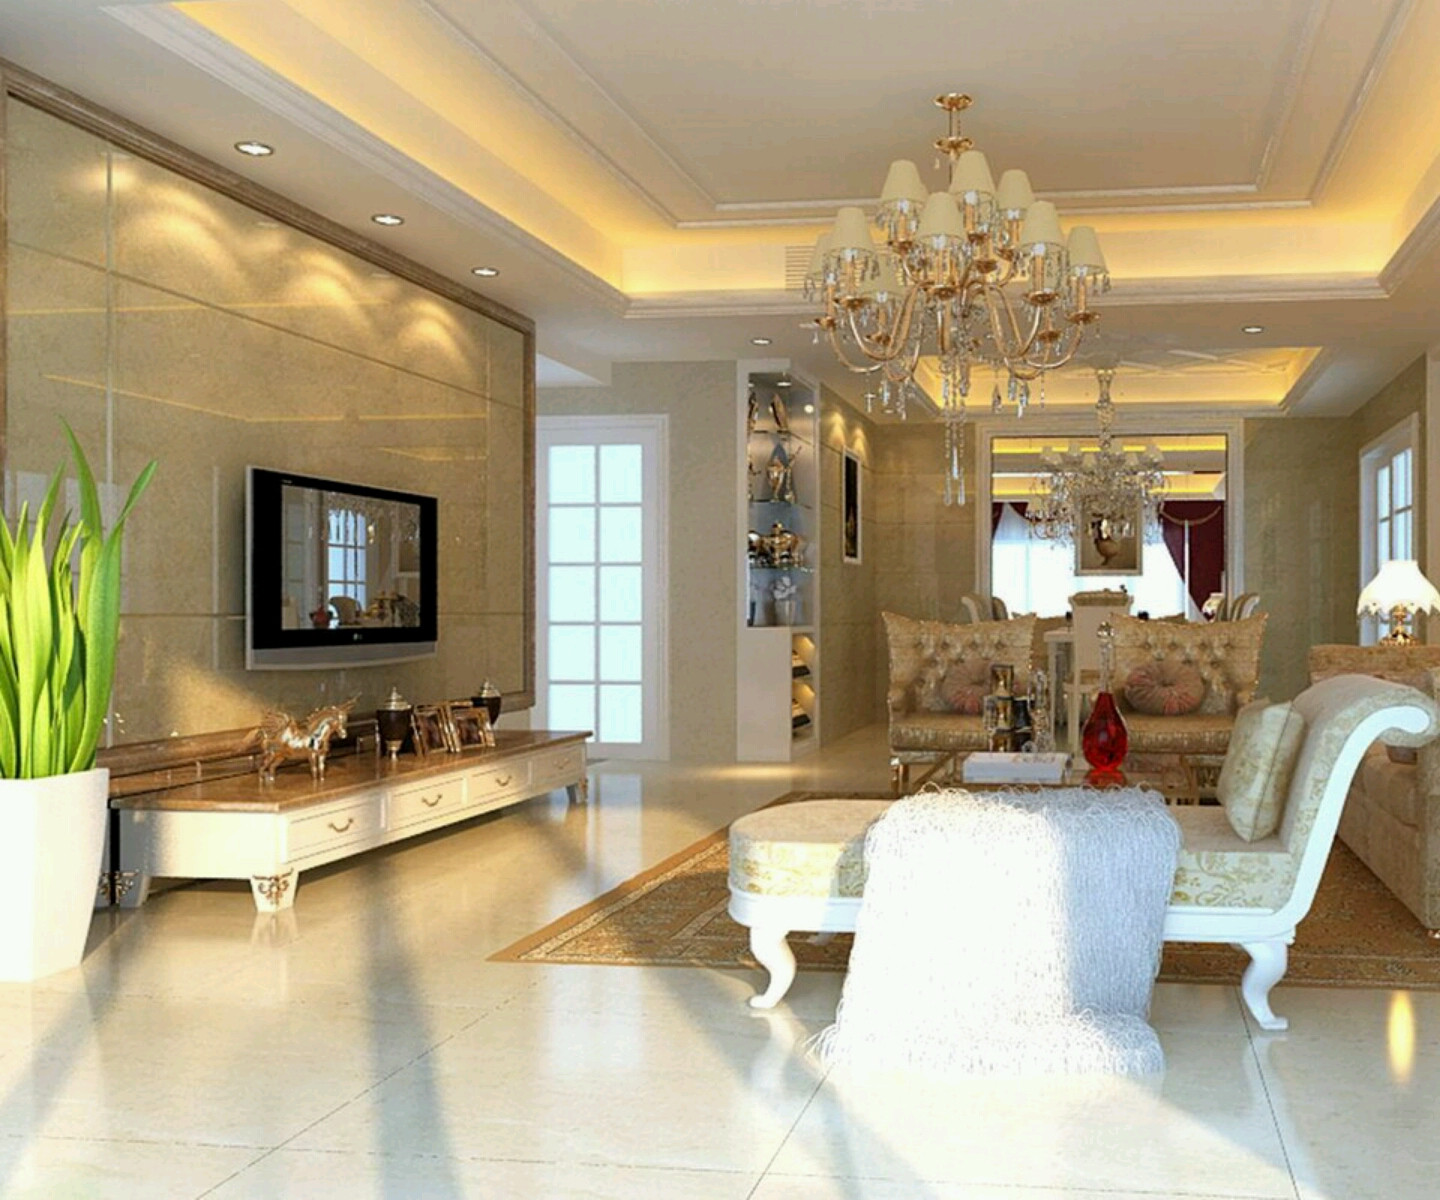 Interior Design Ideas Living Room
 New home designs latest Luxury homes interior decoration